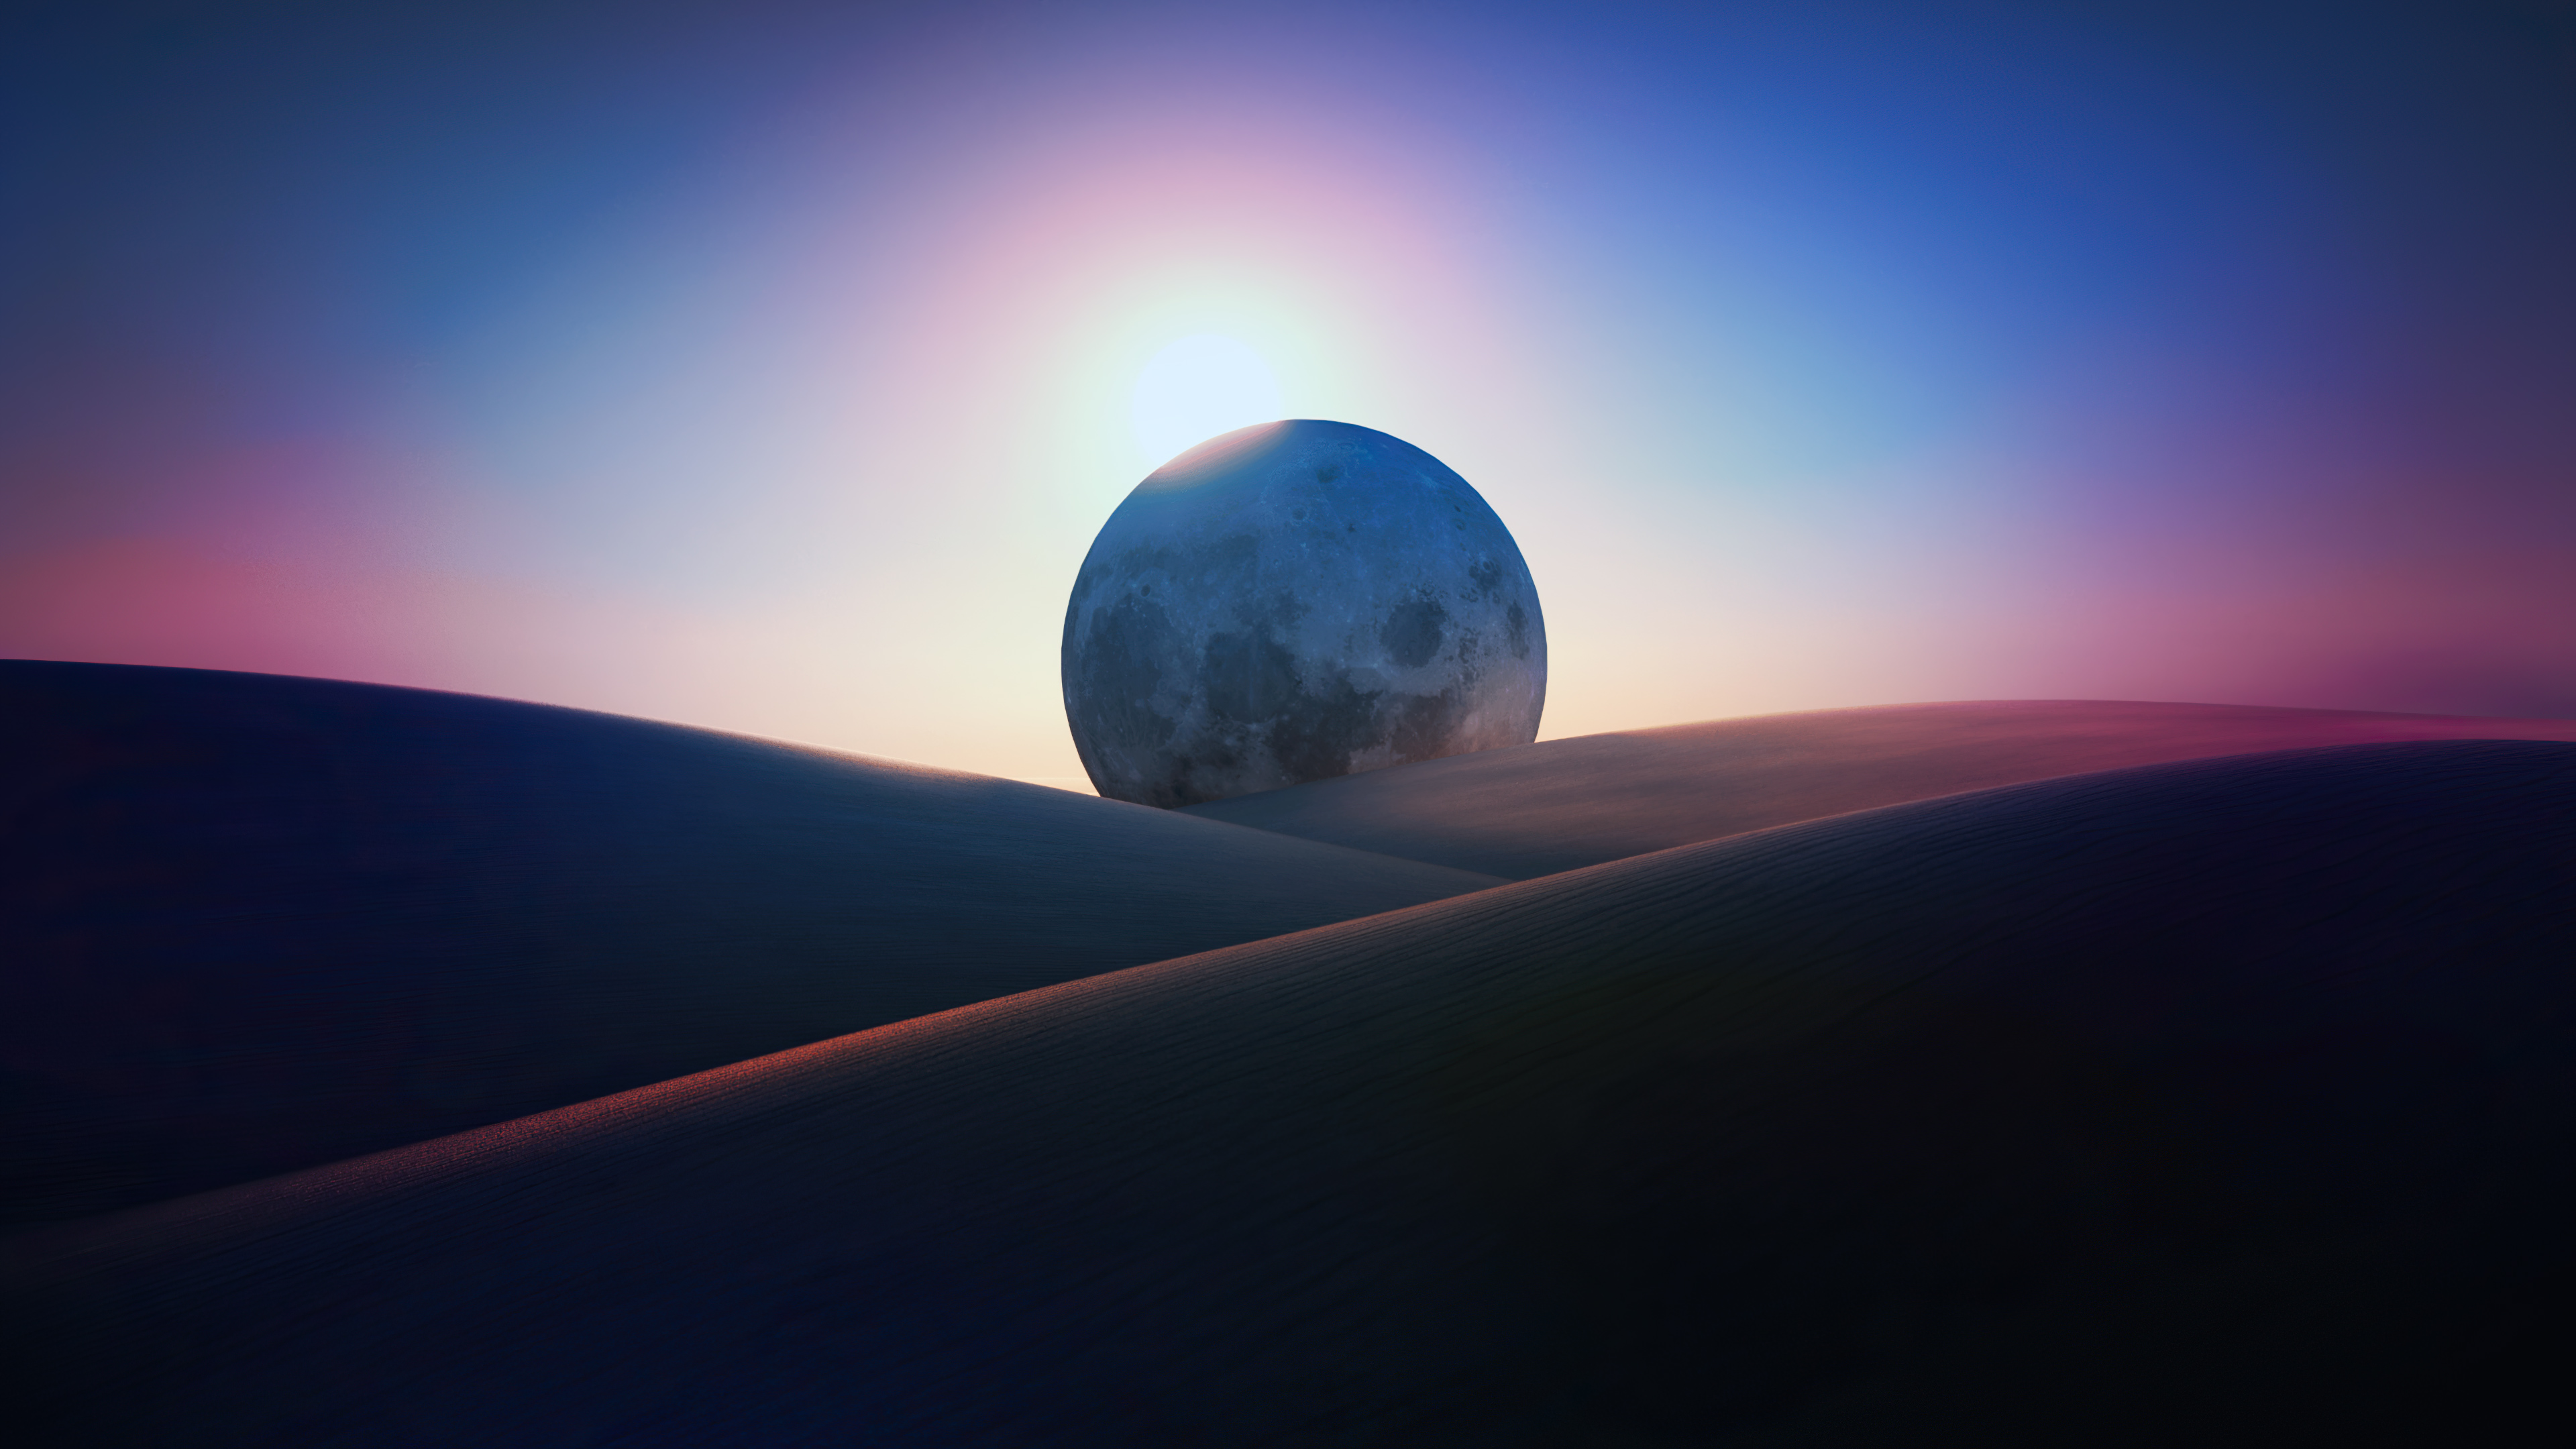 Digital Art Landscape Desert Moon Night Abstract Sky Sand 3840x2160